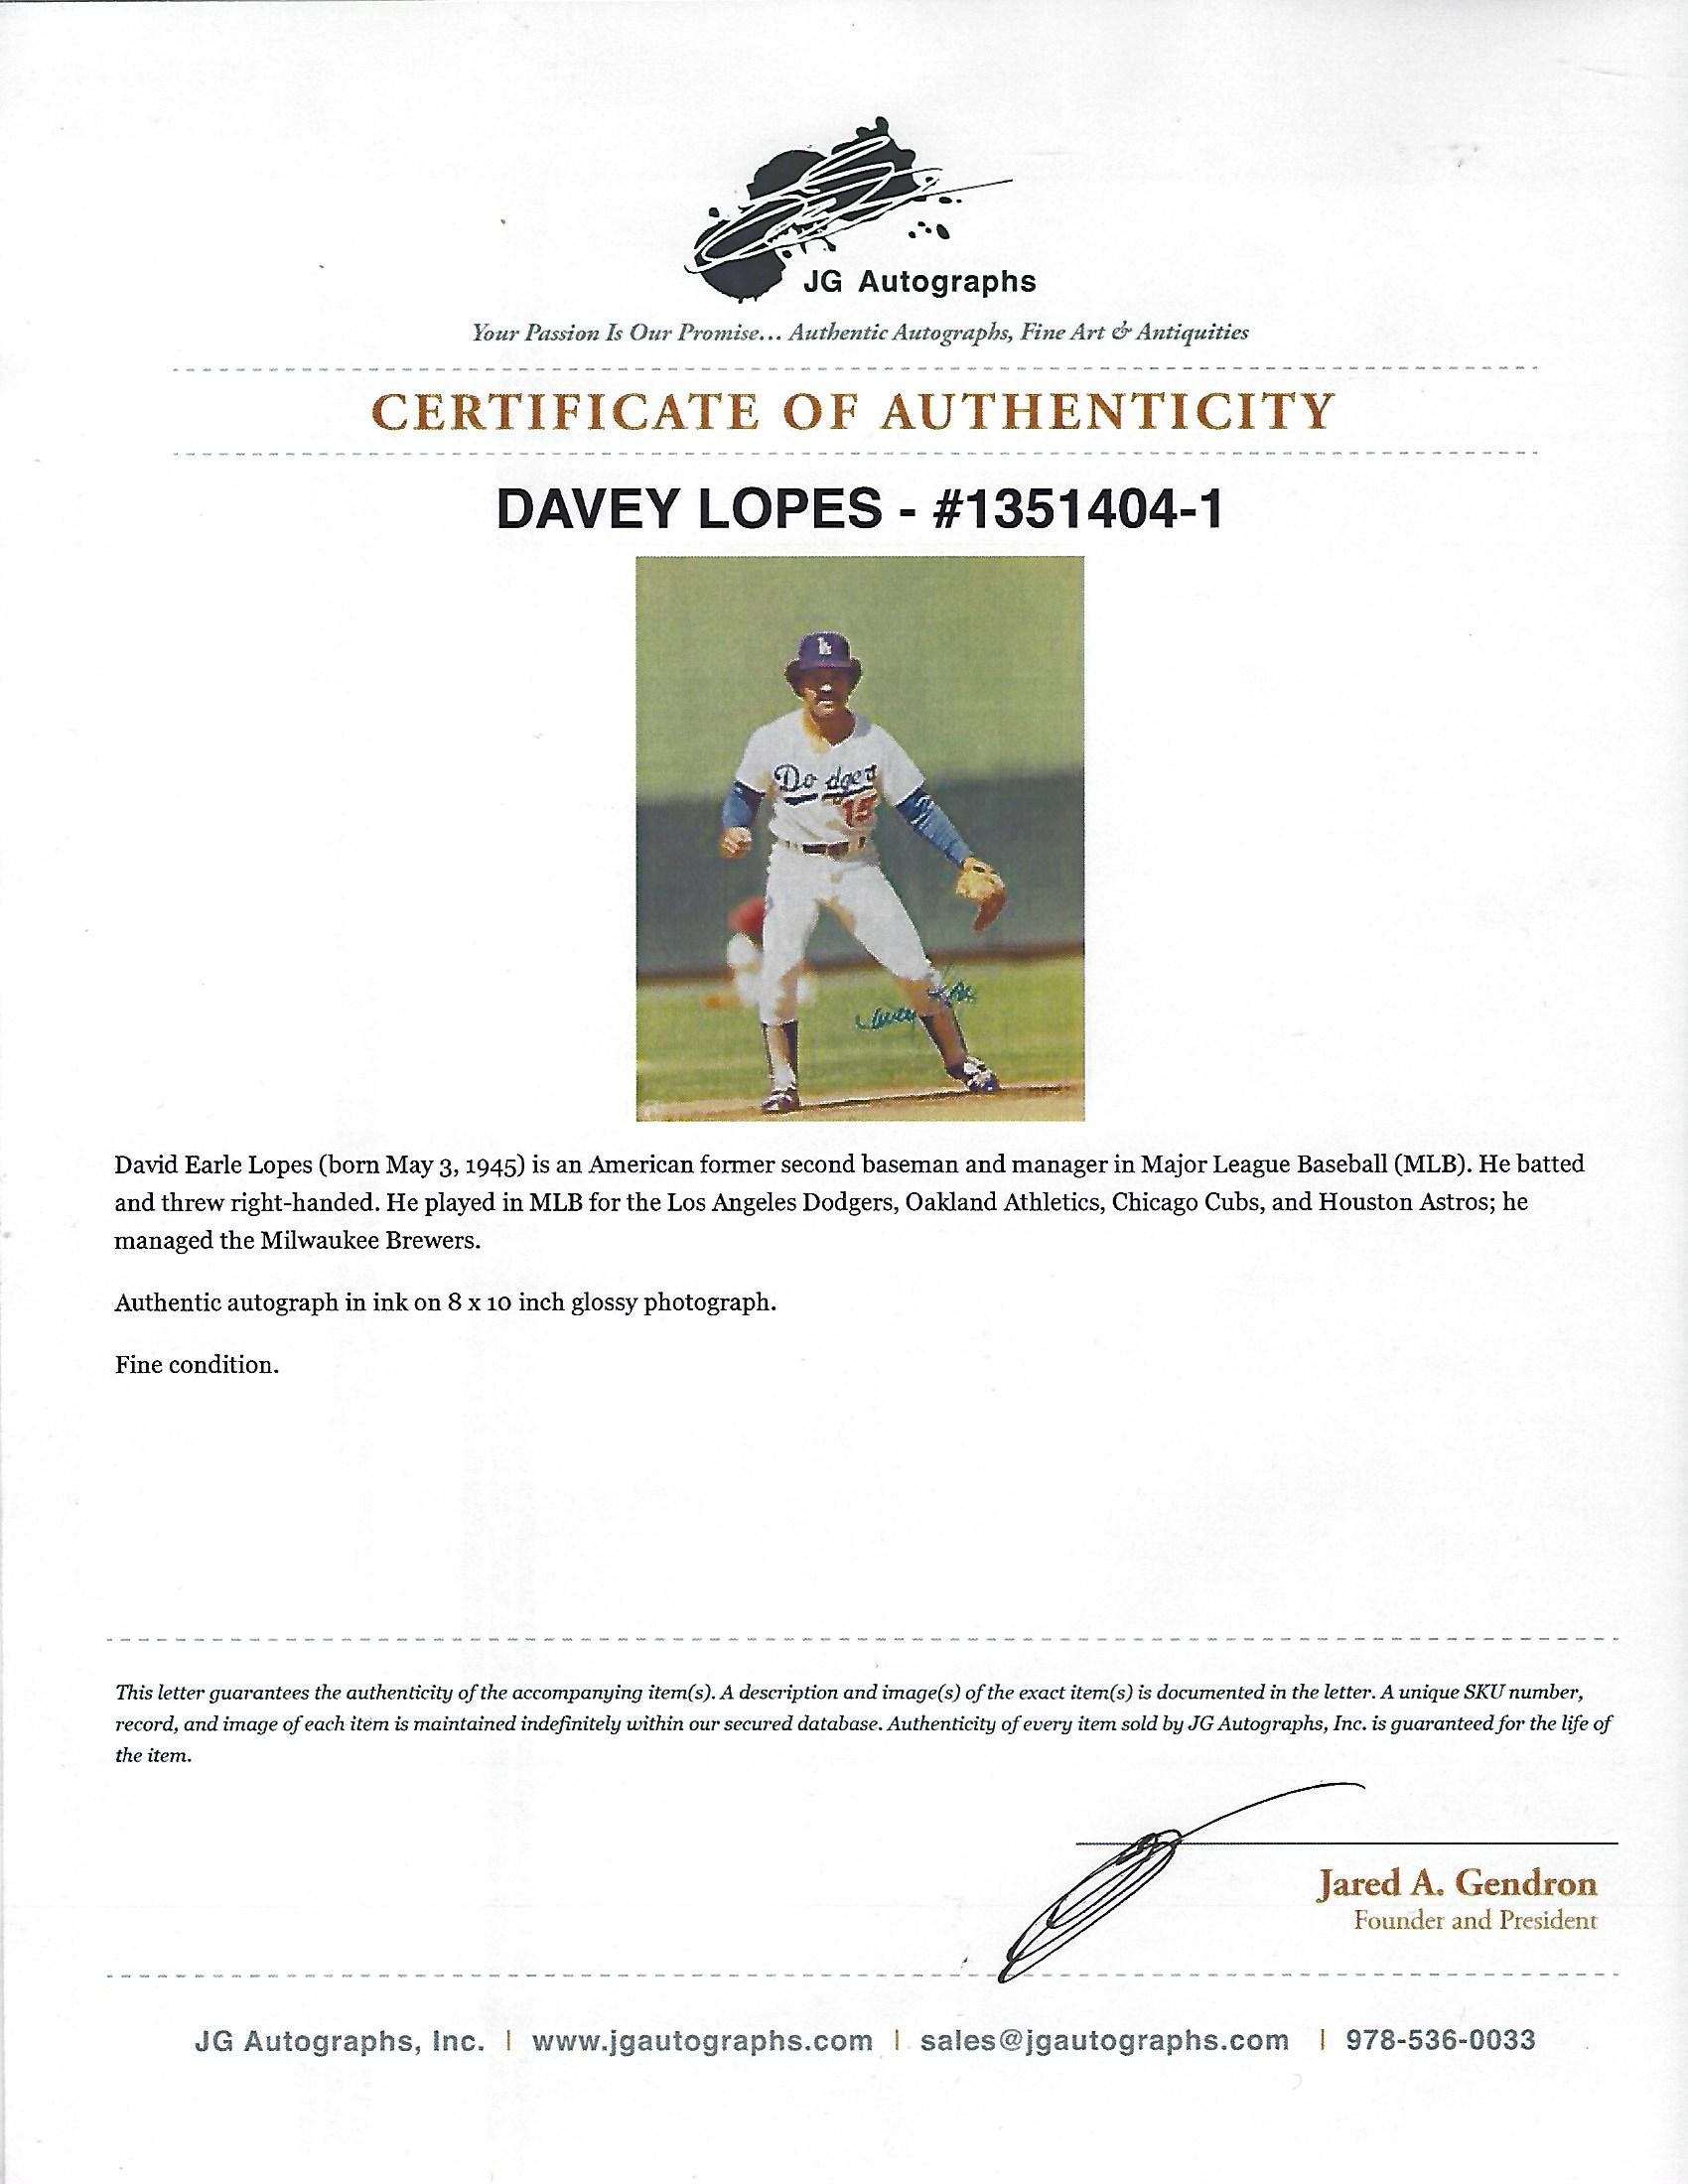 MLB Davey Lopes LA Dodgers Autographed 8x10 Photo W/COA 